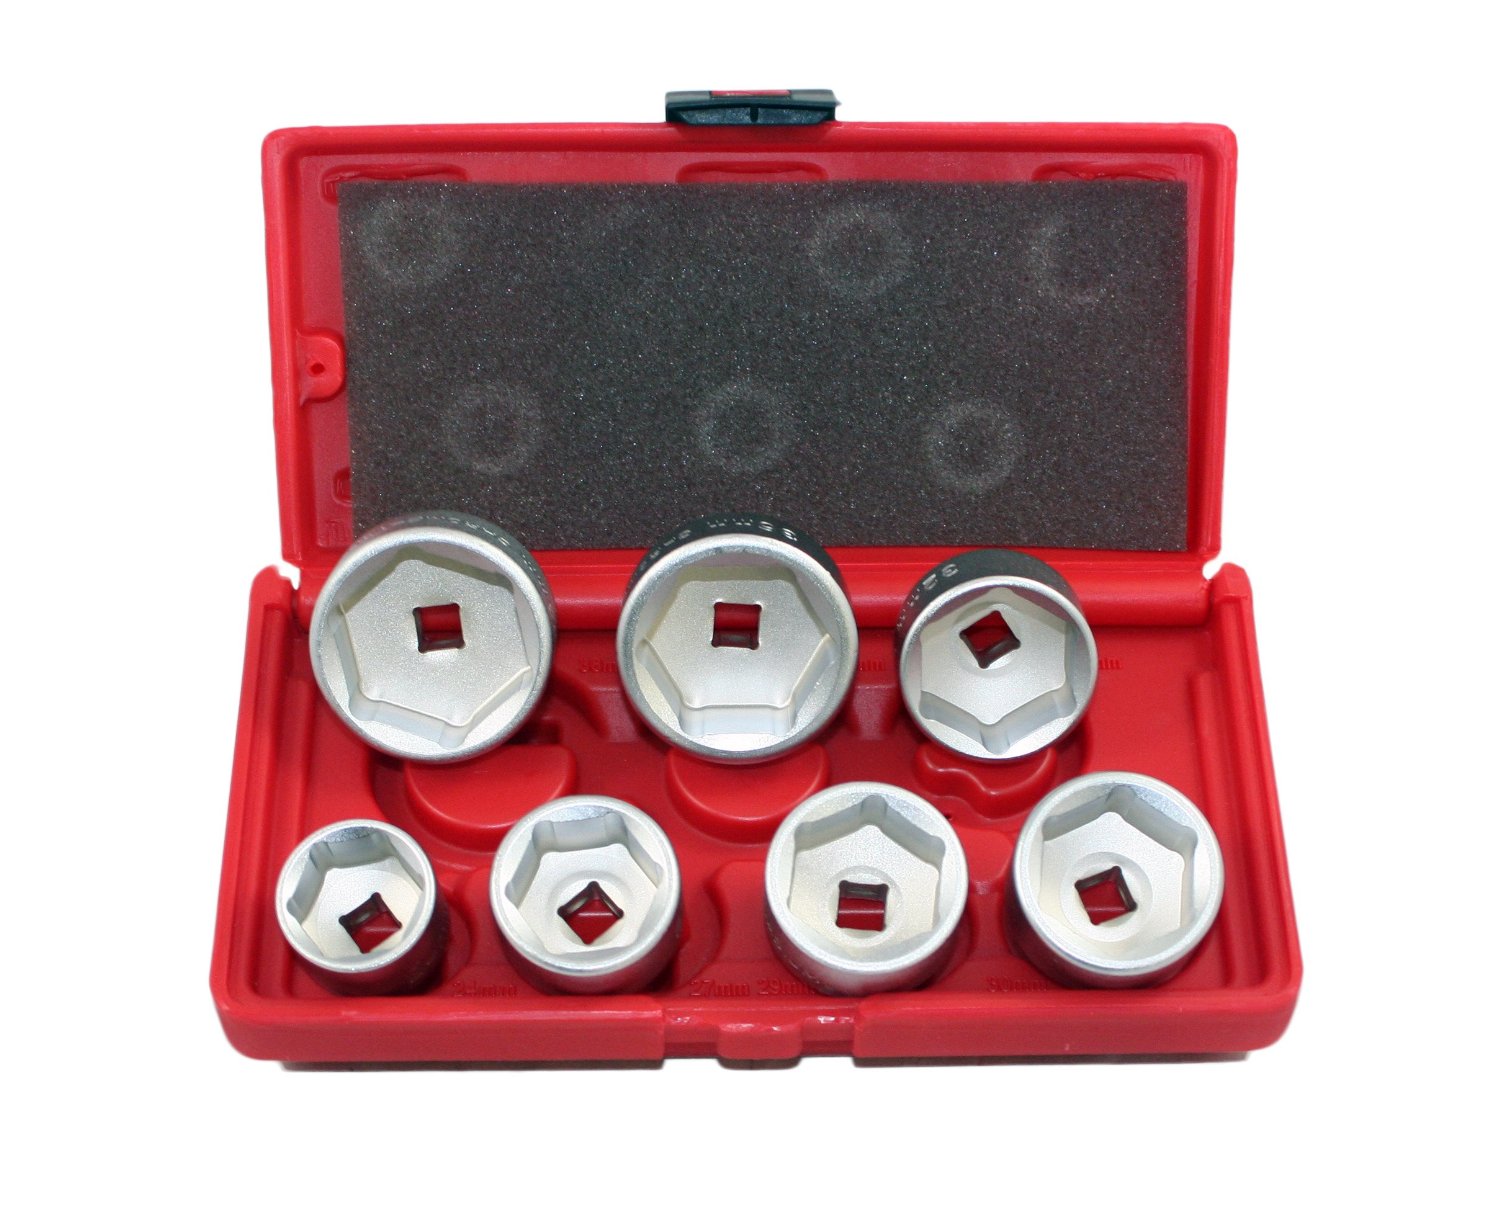 Paper Cartridge Housing Oil Filter Wrench 7-Piece Socket Set Tool Kit